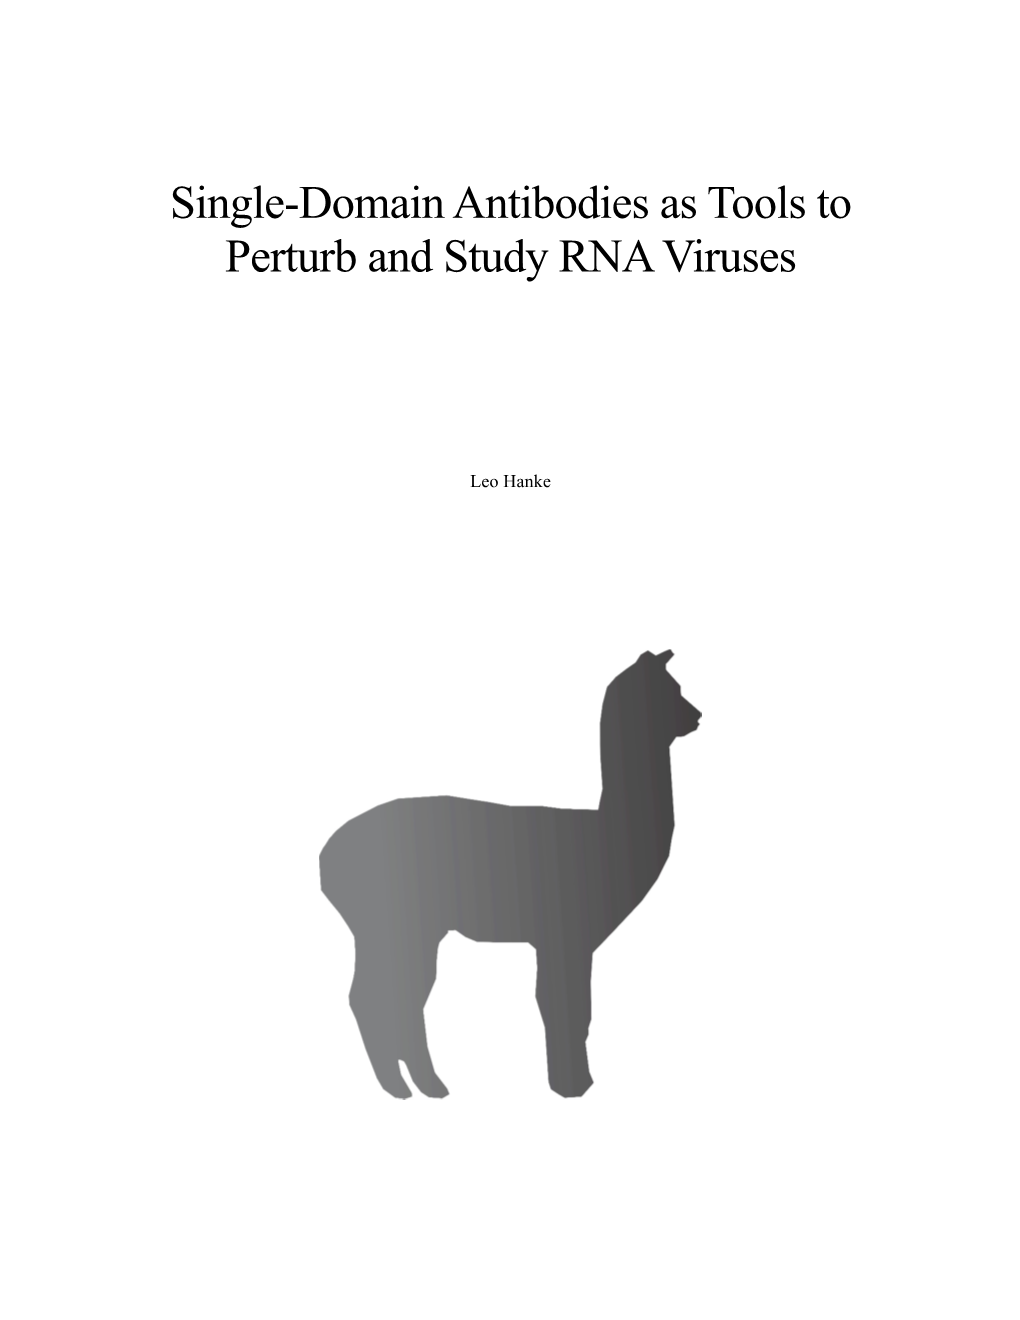 Single-Domain Antibodies As Tools to Perturb and Study RNA Viruses